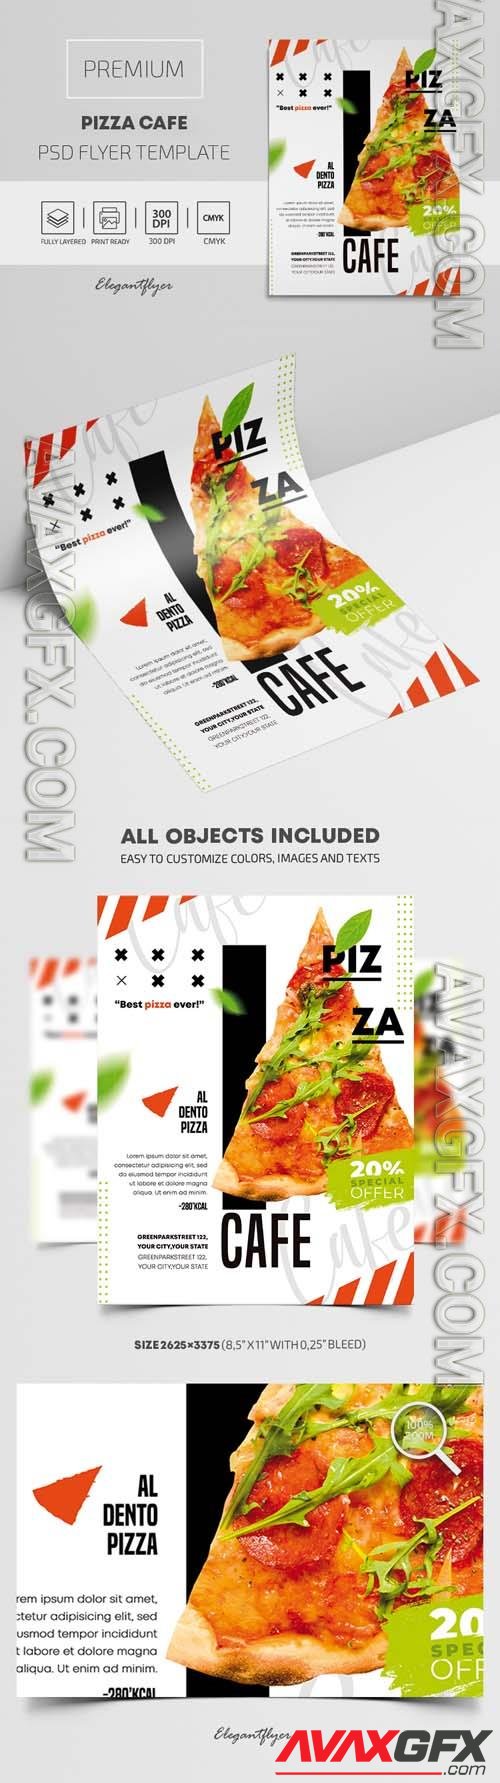 Pizza Cafe  Premium PSD Flyer Template